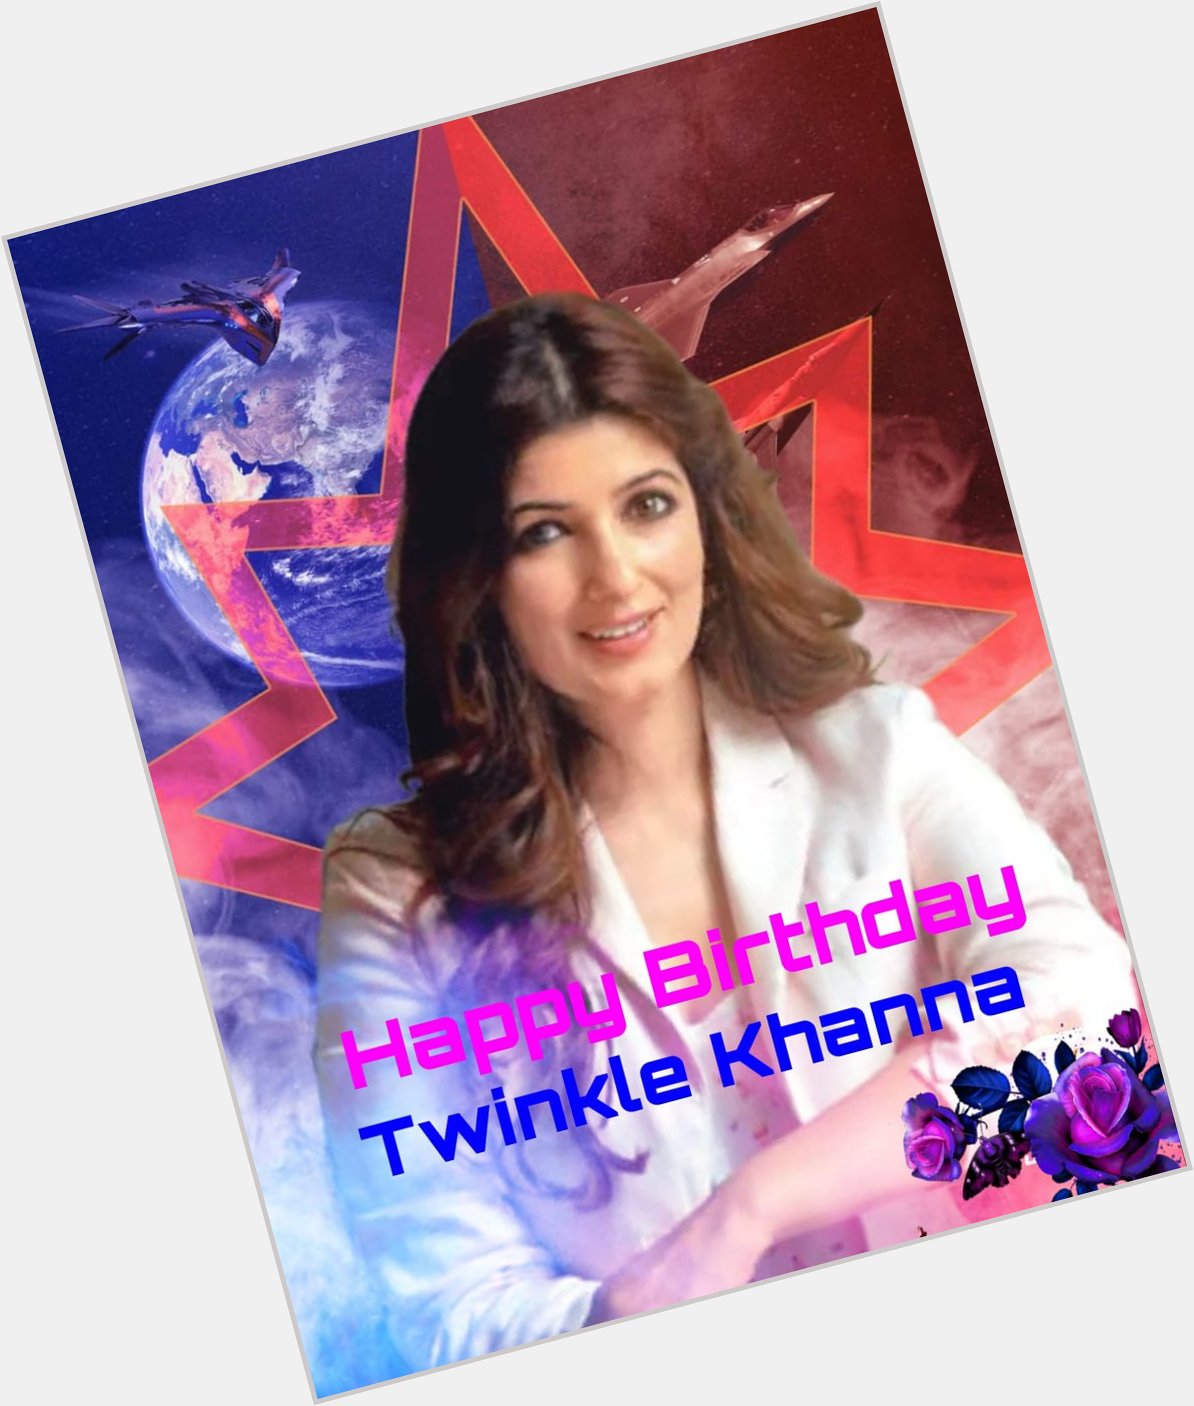 Happy Birthday twinkle khanna   